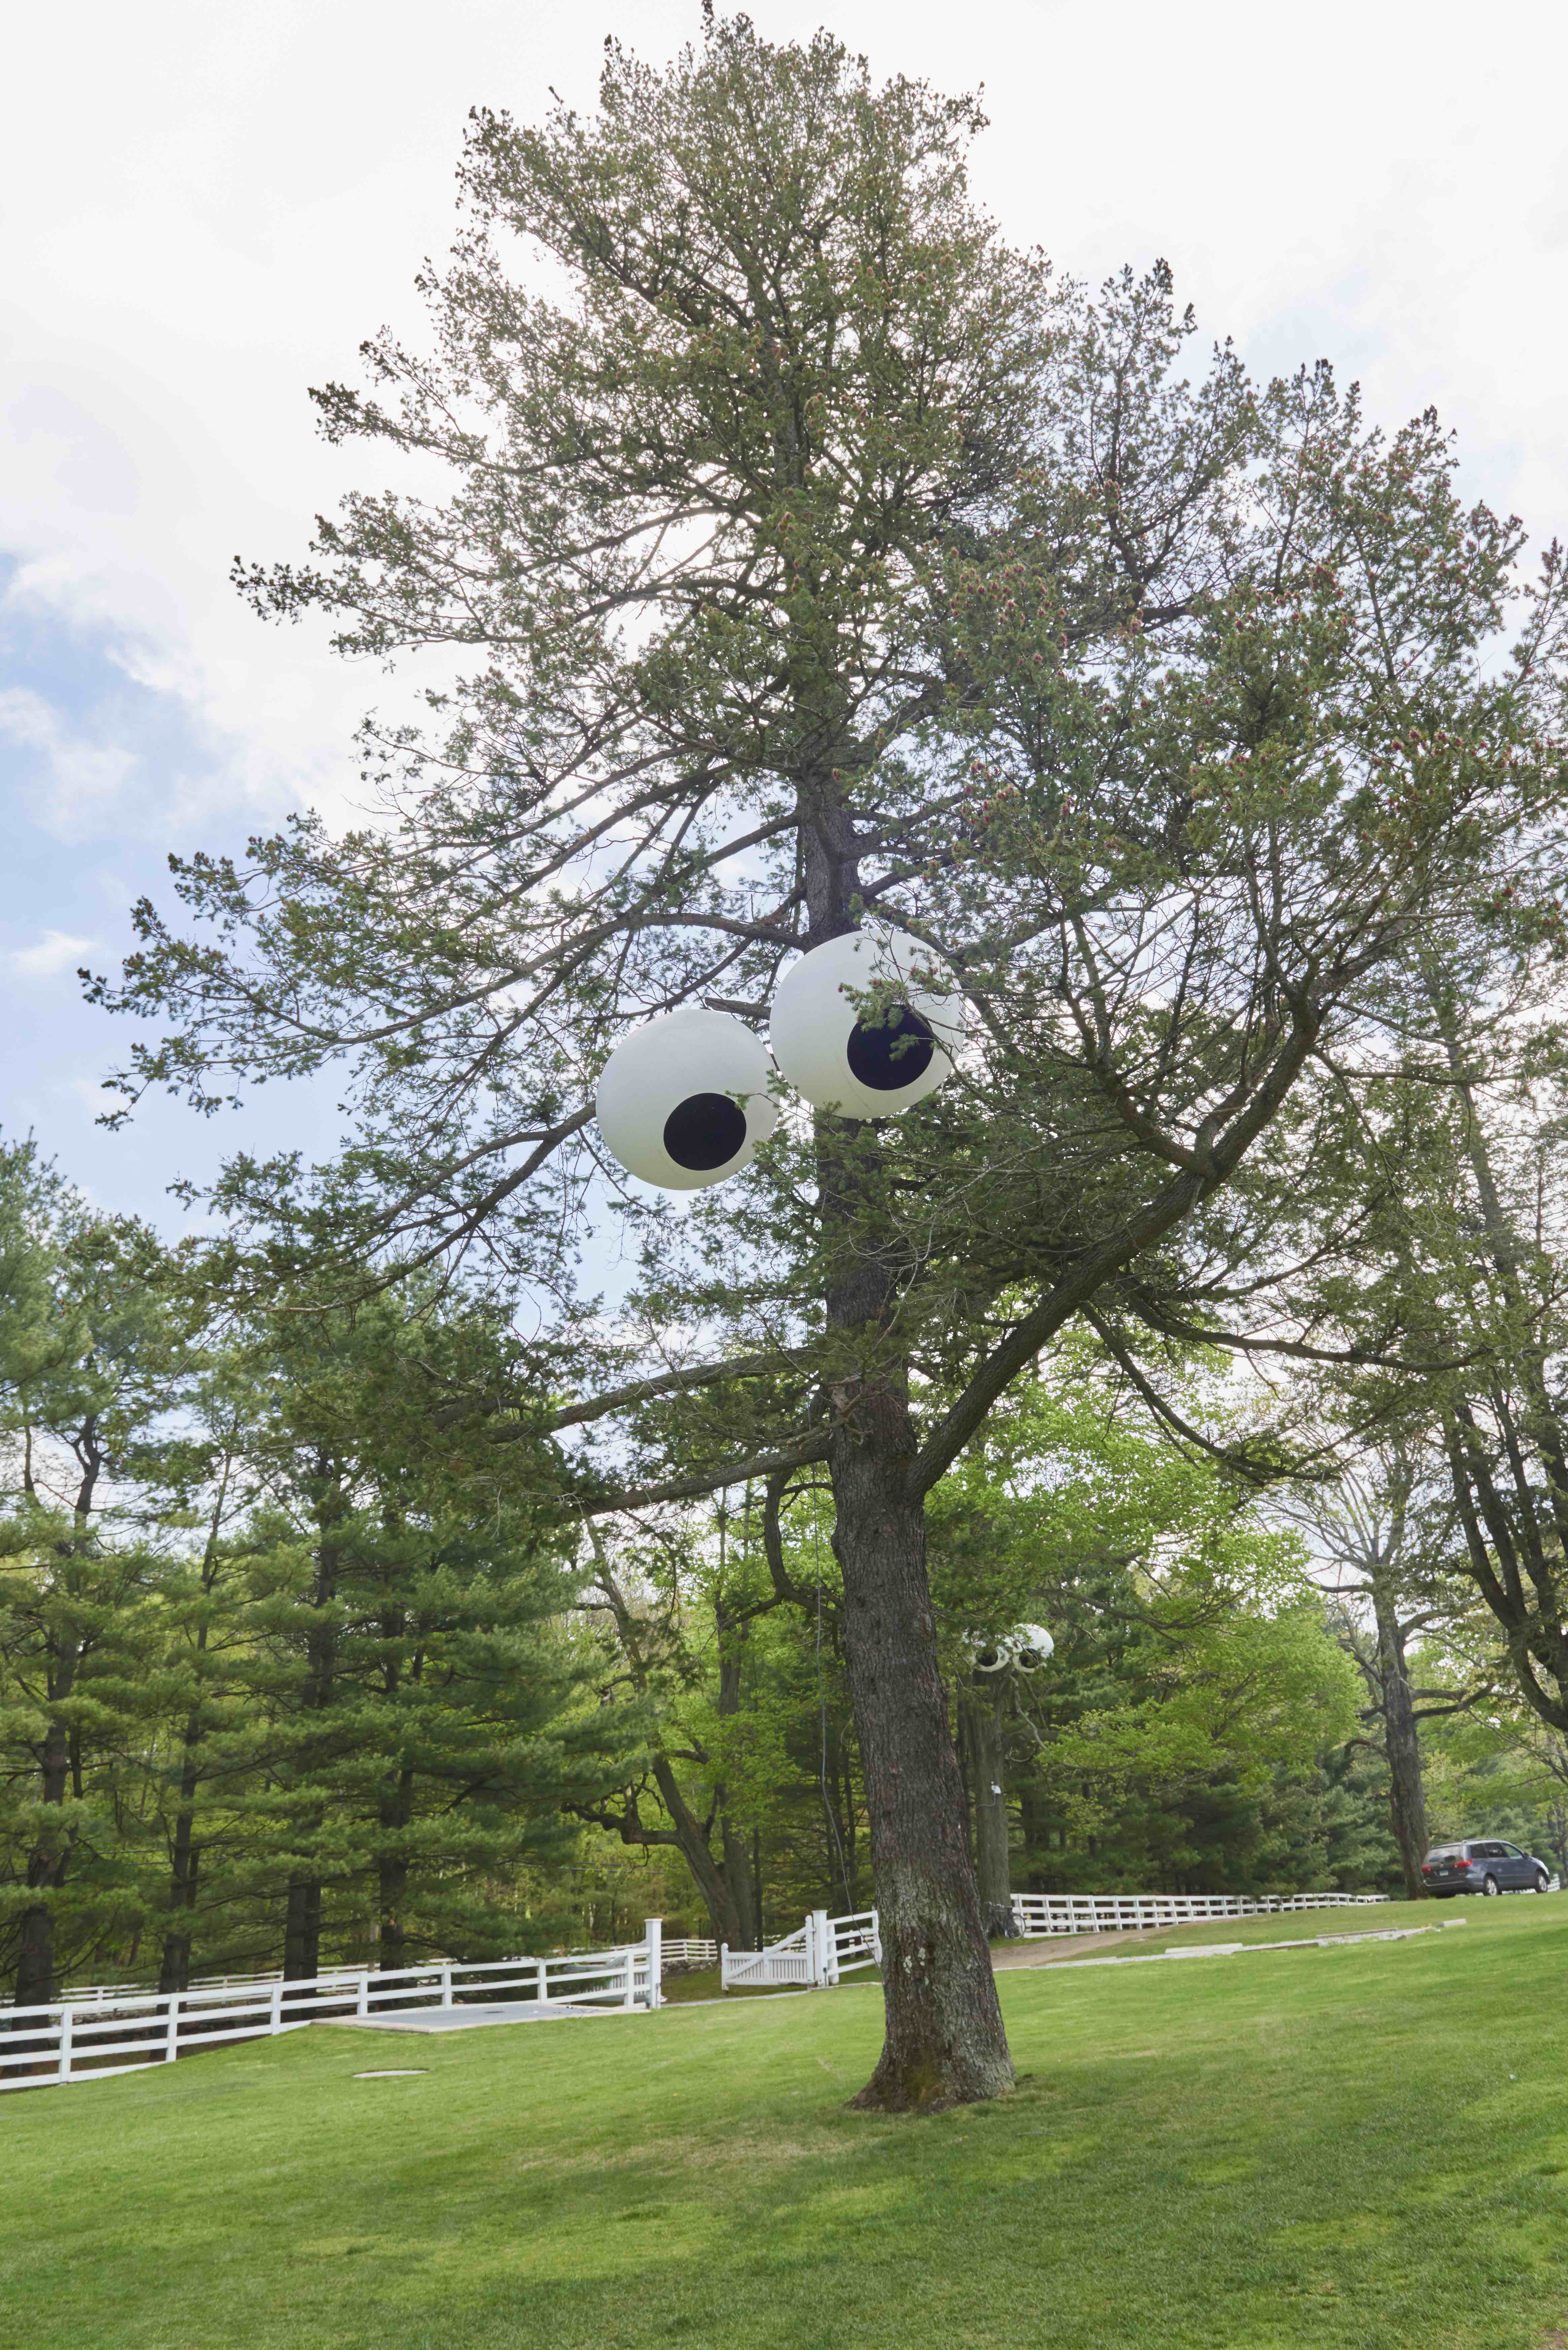 Installation view, Art Idea #13: Put Googly Eyes in Trees, 2015